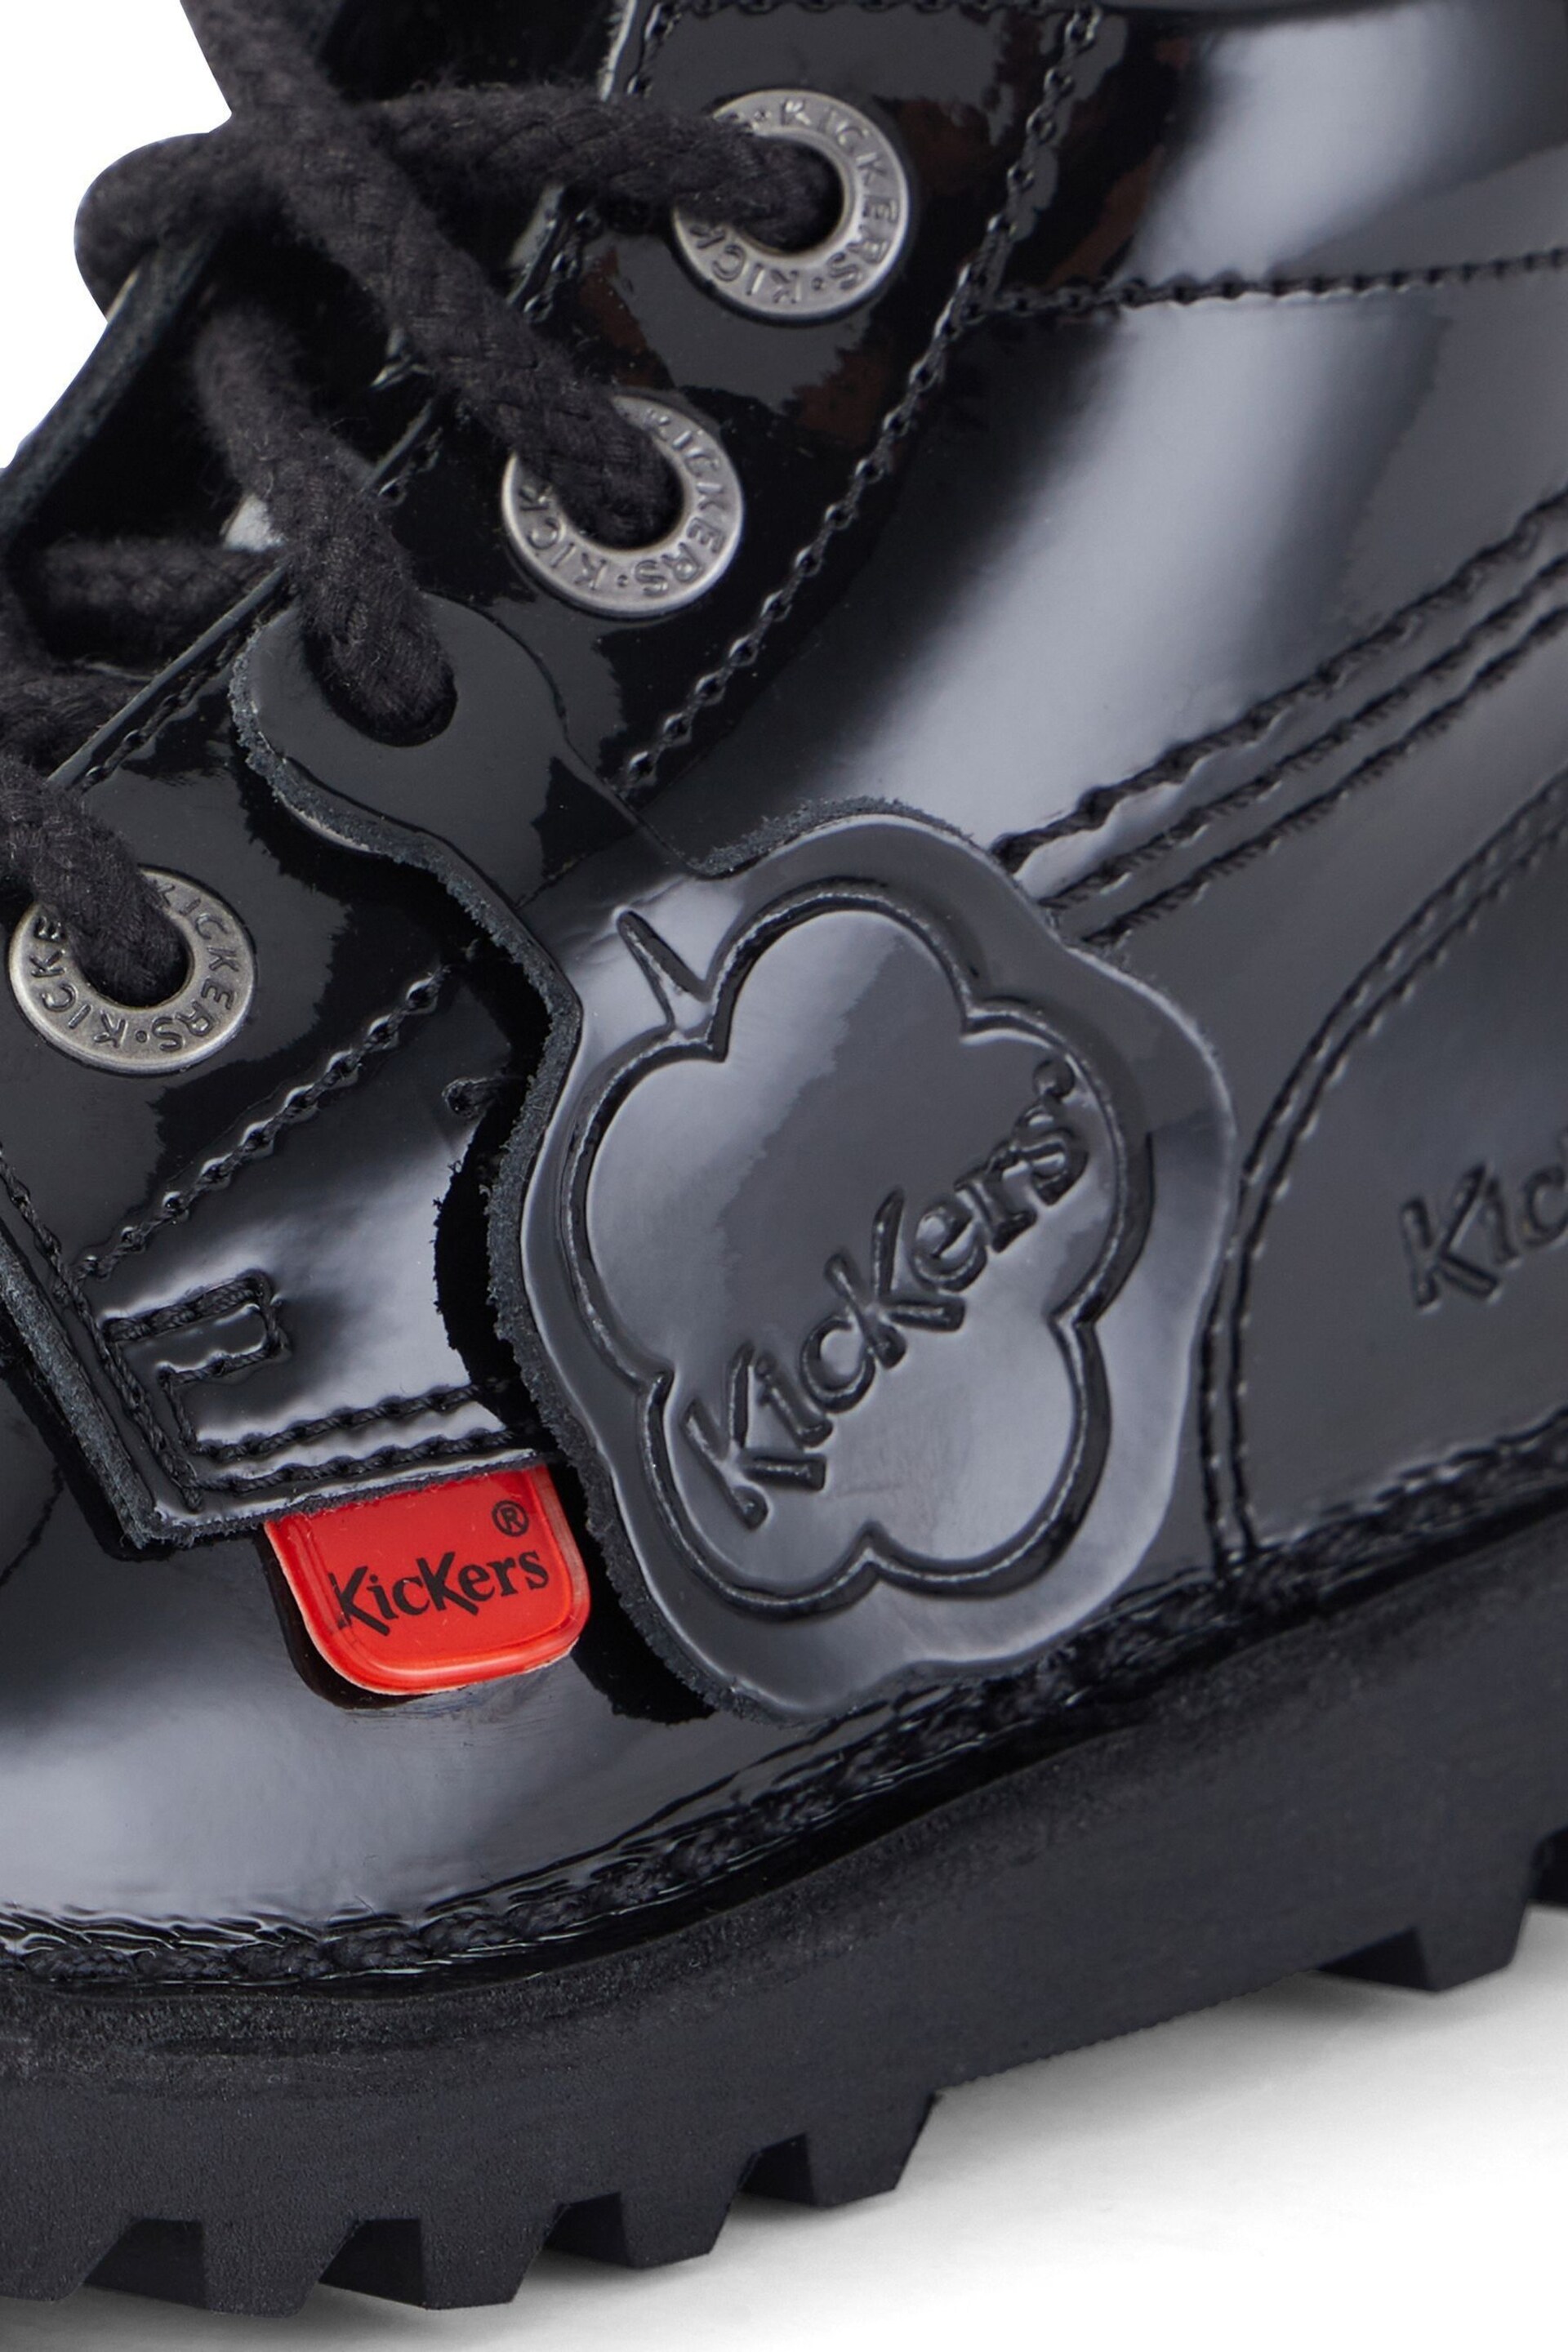 Kickers Kick Hi Zip Leather Boots - Image 6 of 6